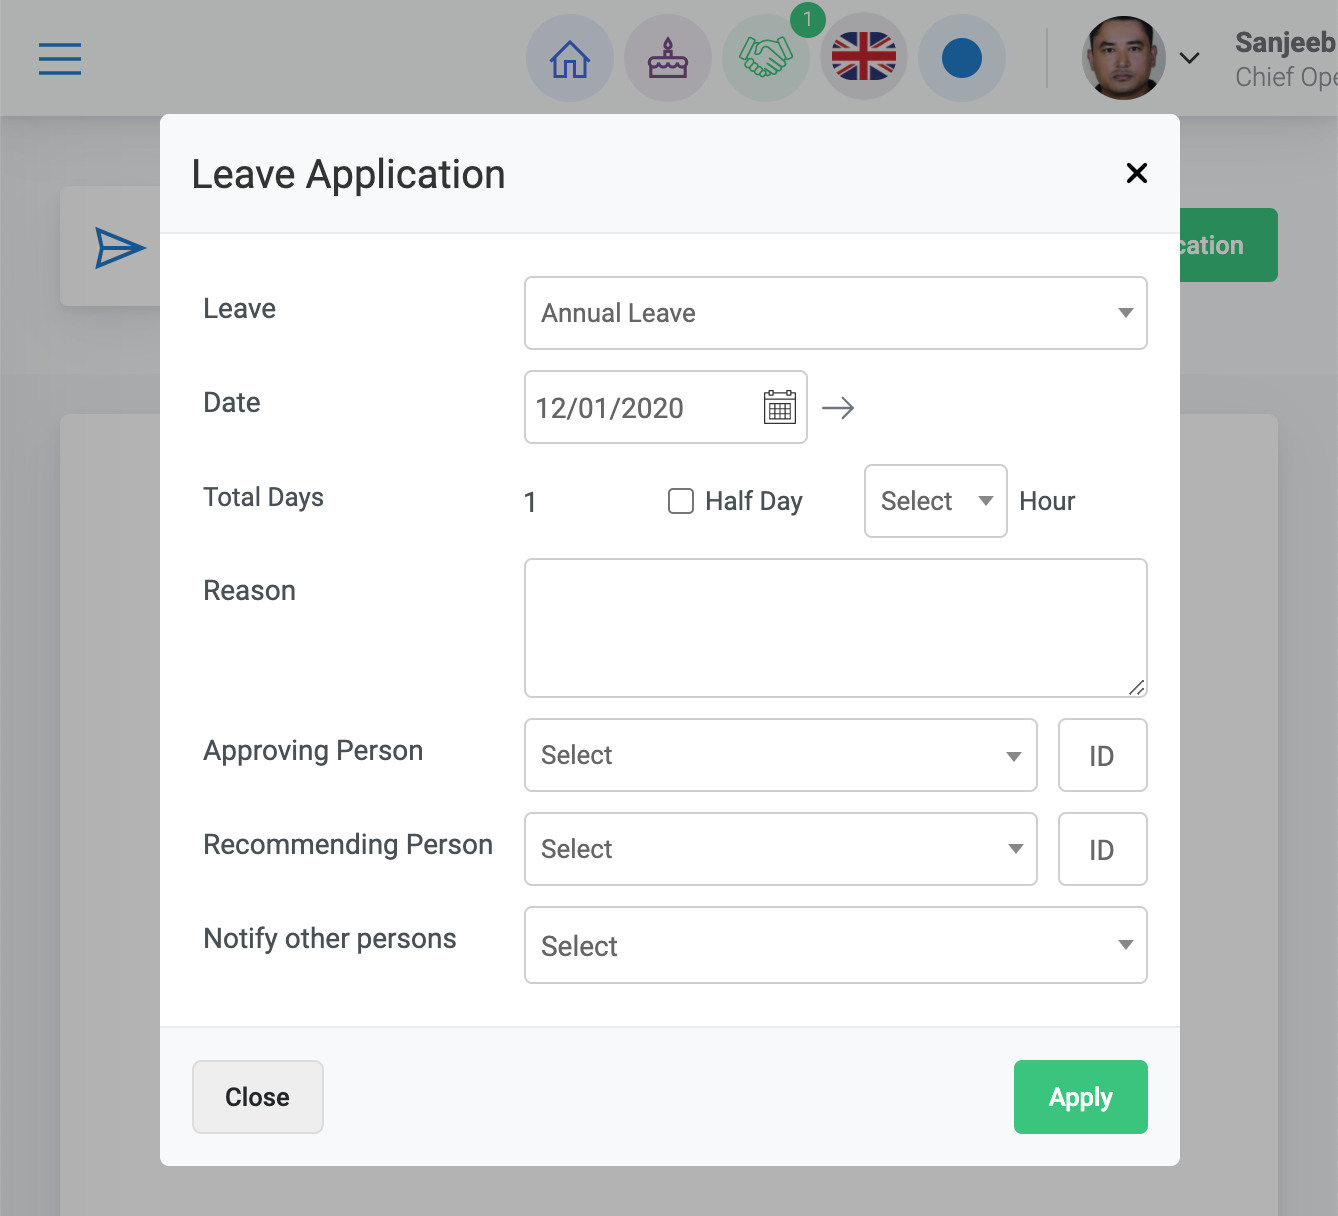 Leave application form in HRIS portal